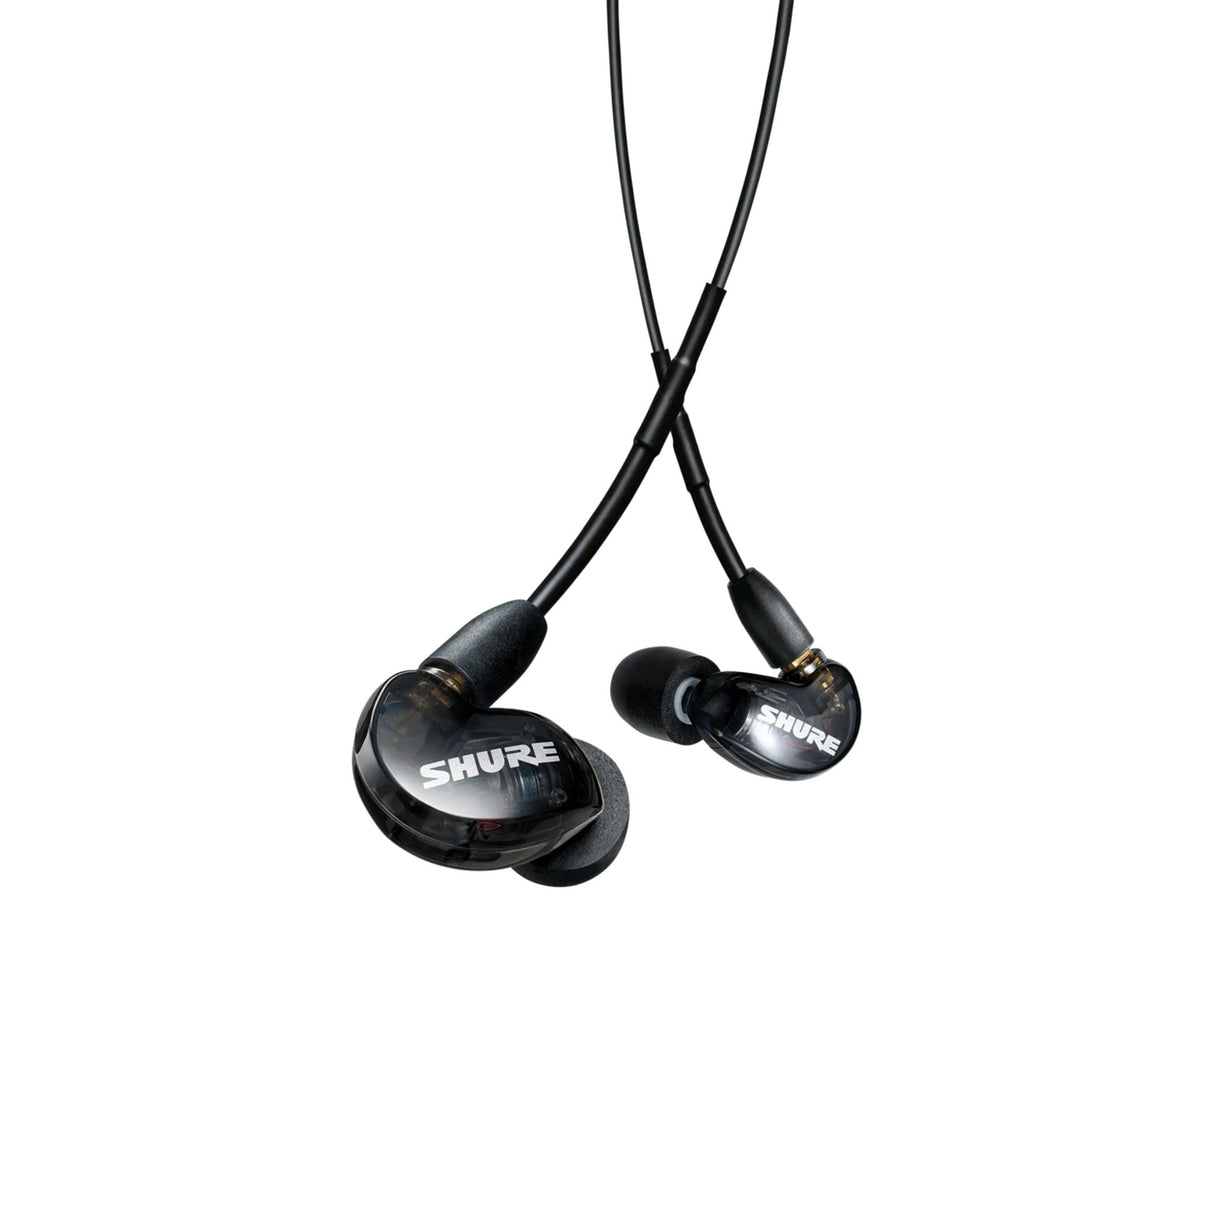 Shure SE215-K Sound Isolating Earphones, Black (Used)